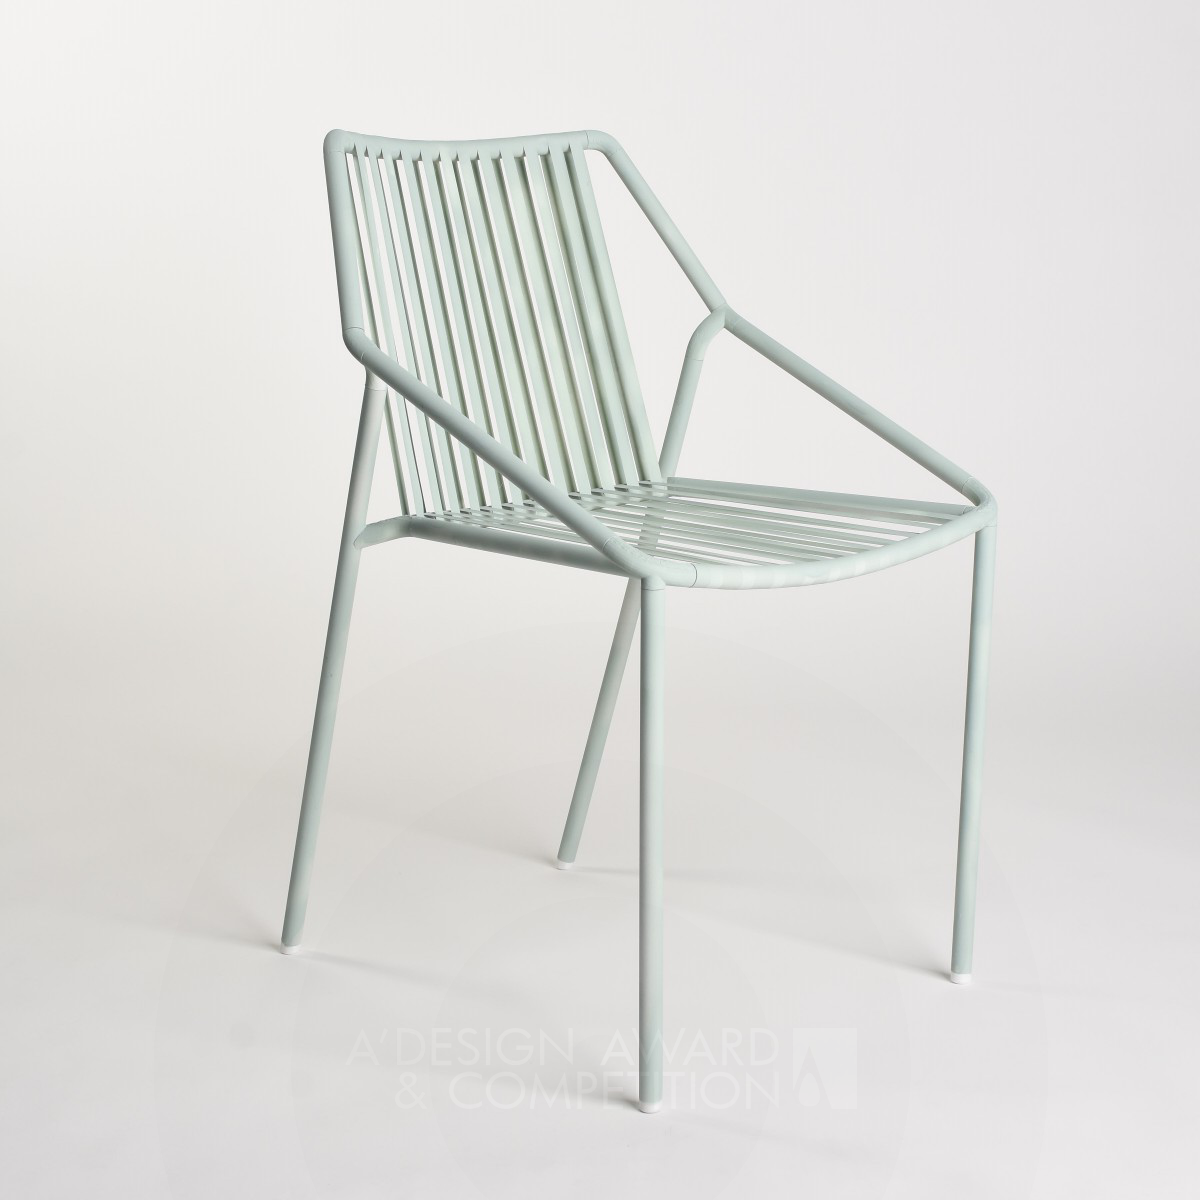 Tomeo <b>Outdoor Metallic Chair